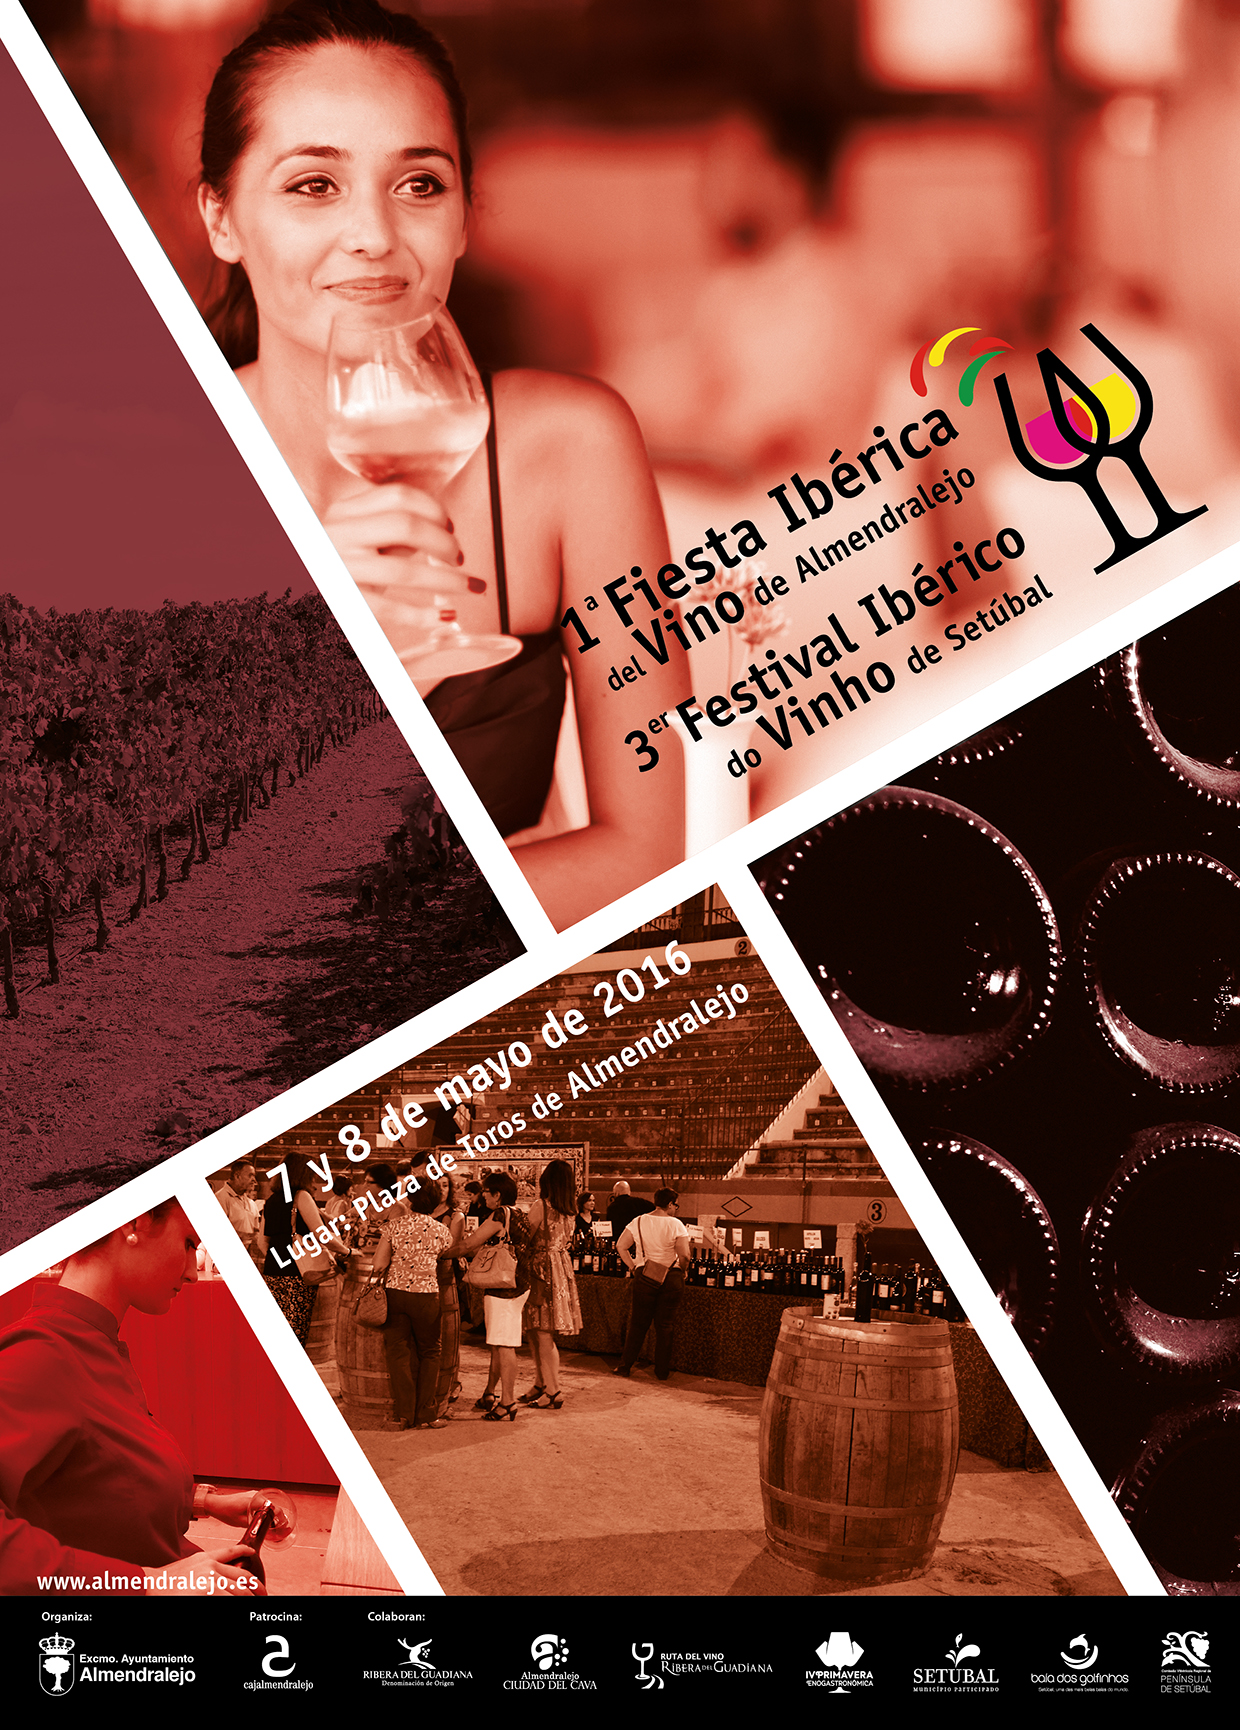 1 fiesta iberica del vino de almendralejo 3 festival iberico do vinho de setubal